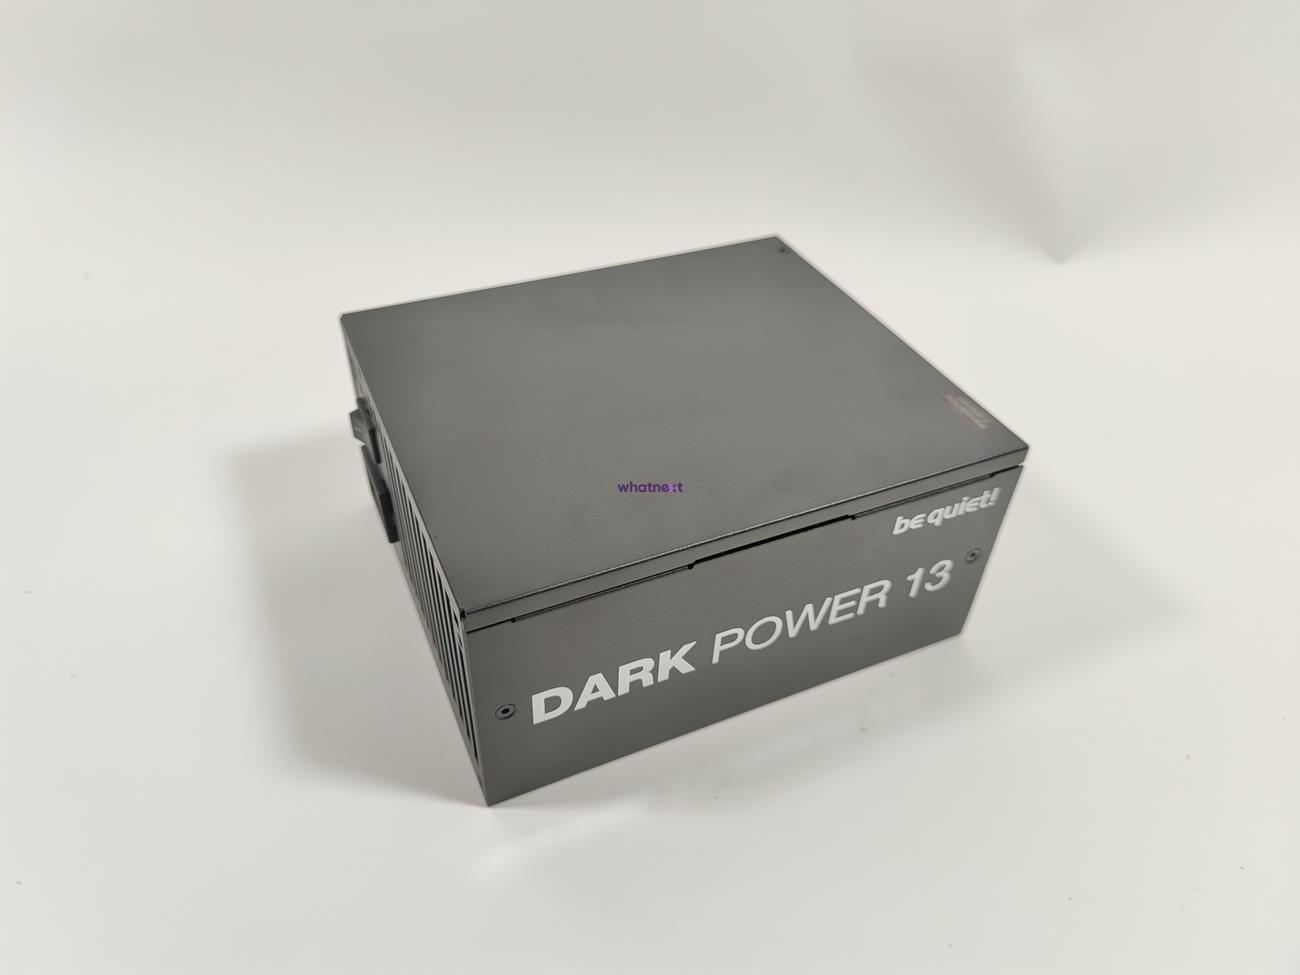 test be quiet! Dark Power 13 1000W, recenzja be quiet! Dark Power 13 1000W, opinia be quiet! Dark Power 13 1000W